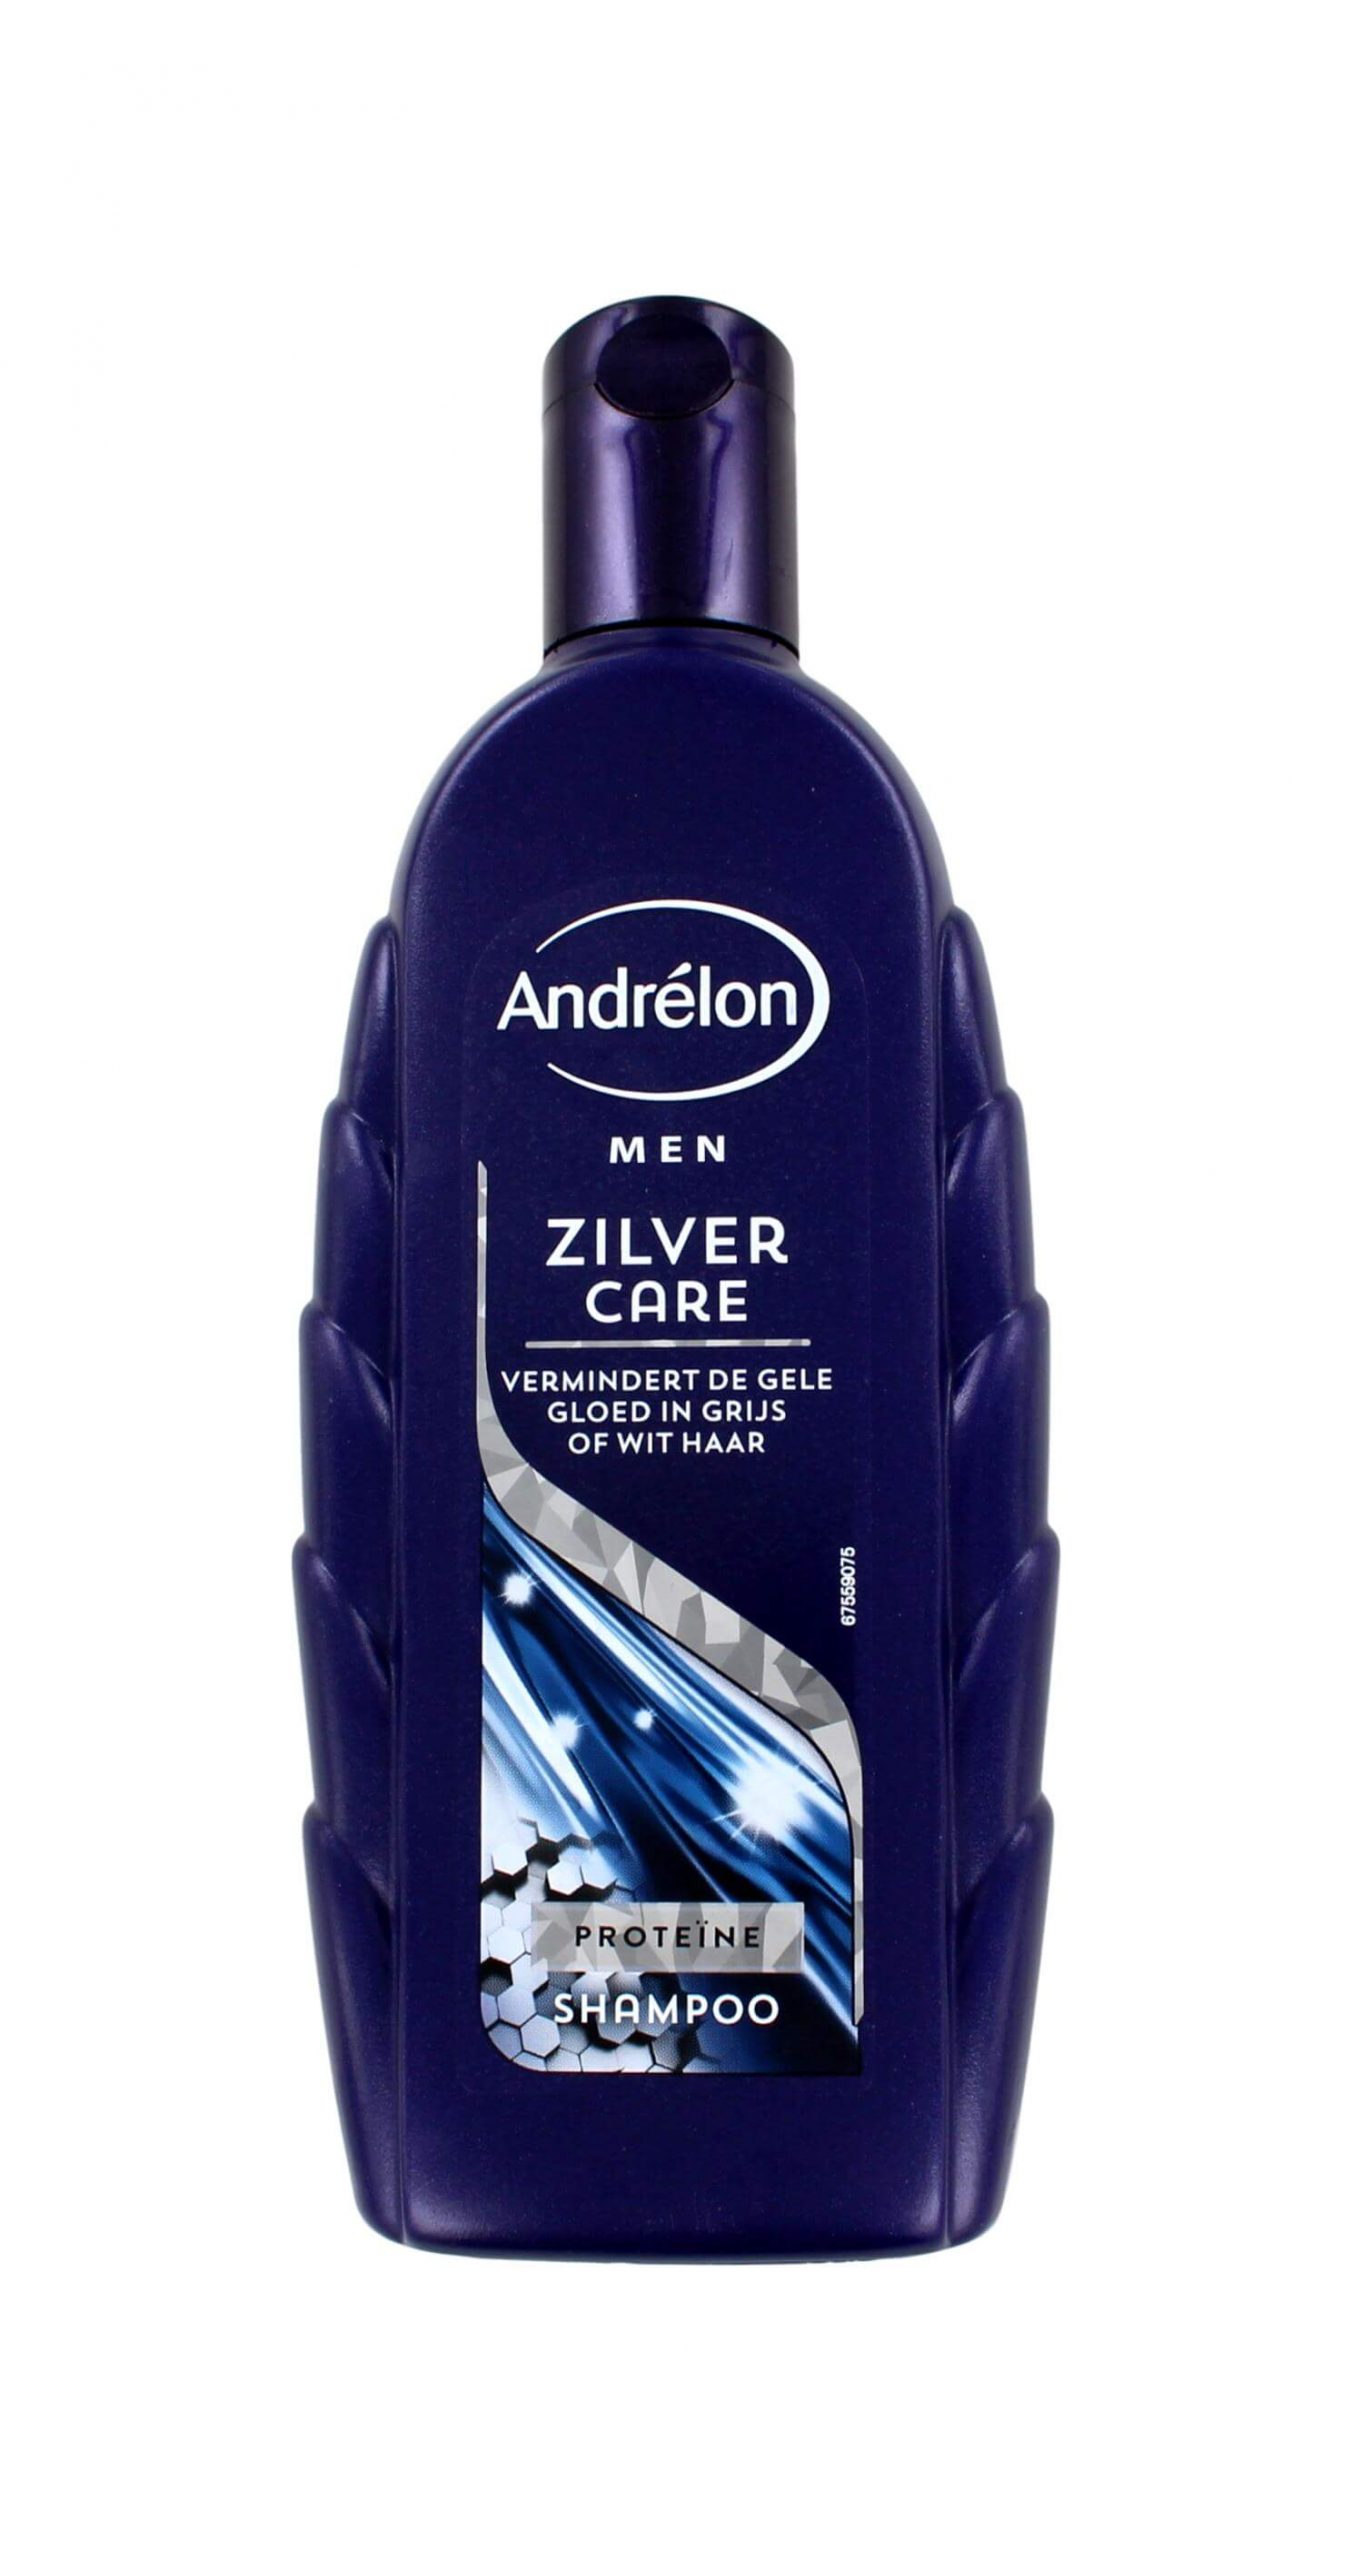 Andrelon Shampoo Men Zilver Care, ml | 68% Korting